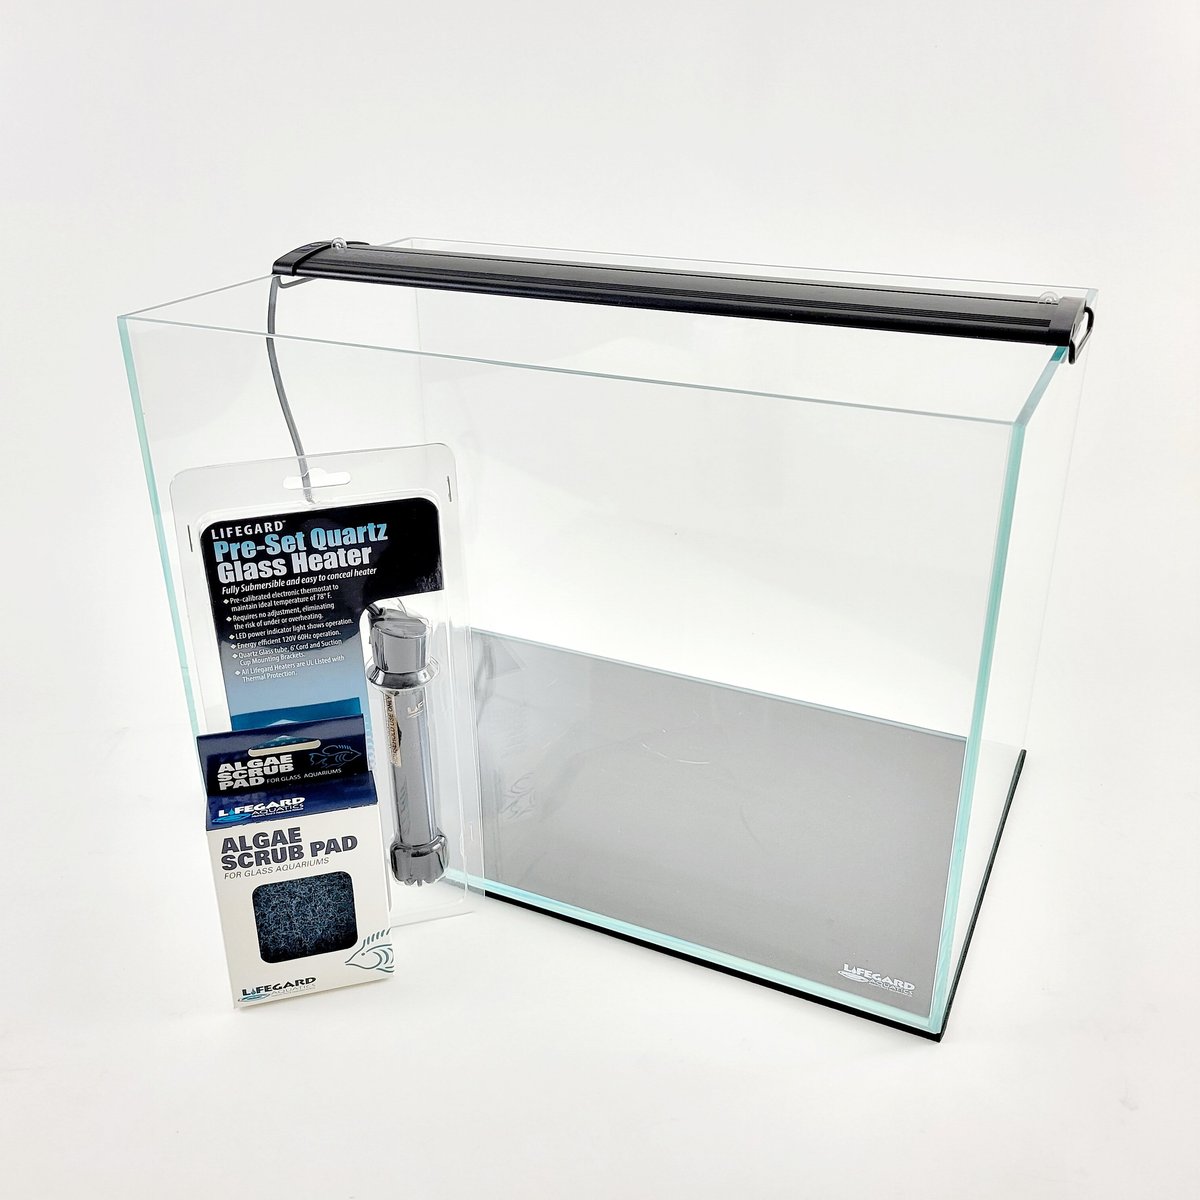 AQUEON LED MiniBow SmartClean Fish Aquarium Kit, Black, 5-gal